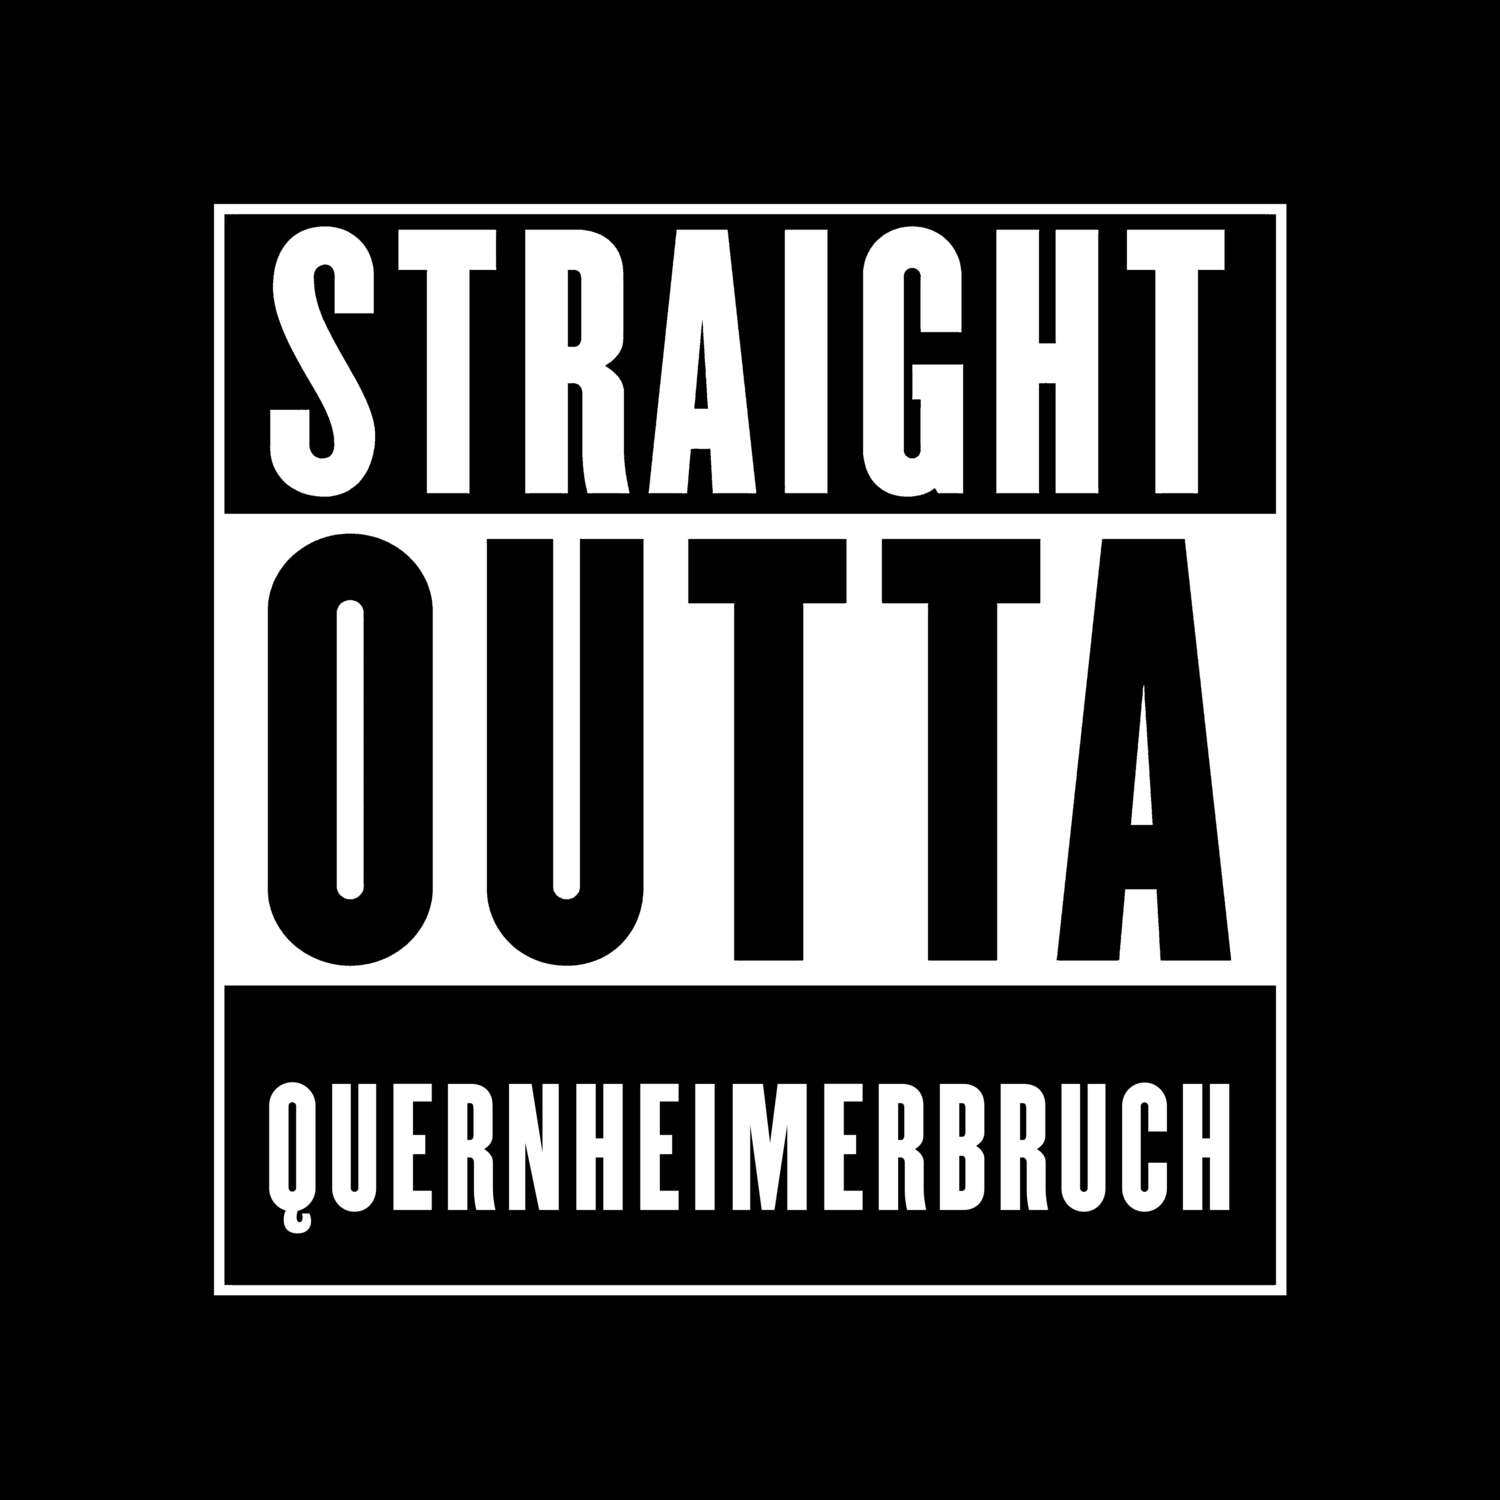 Quernheimerbruch T-Shirt »Straight Outta«